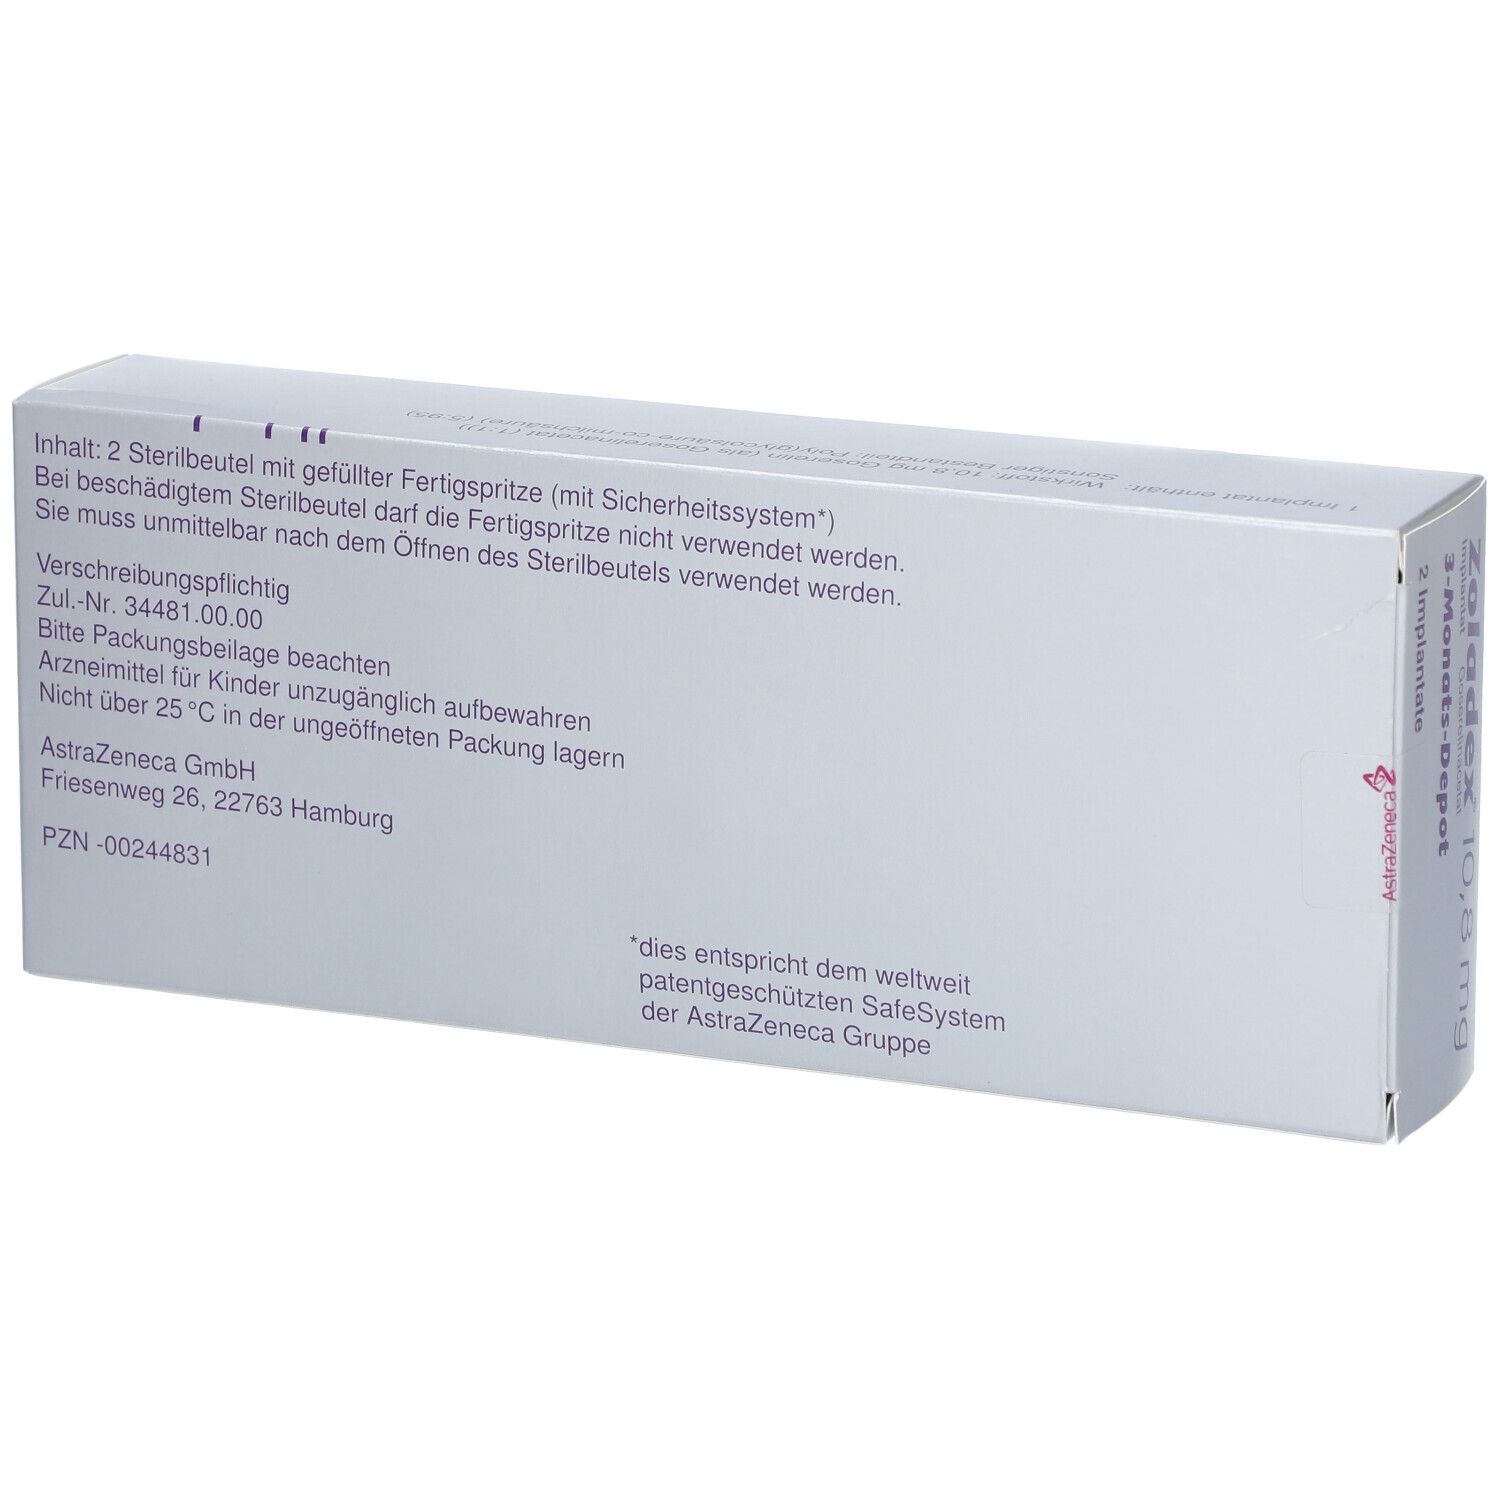 Zoladex® 10,8  mg